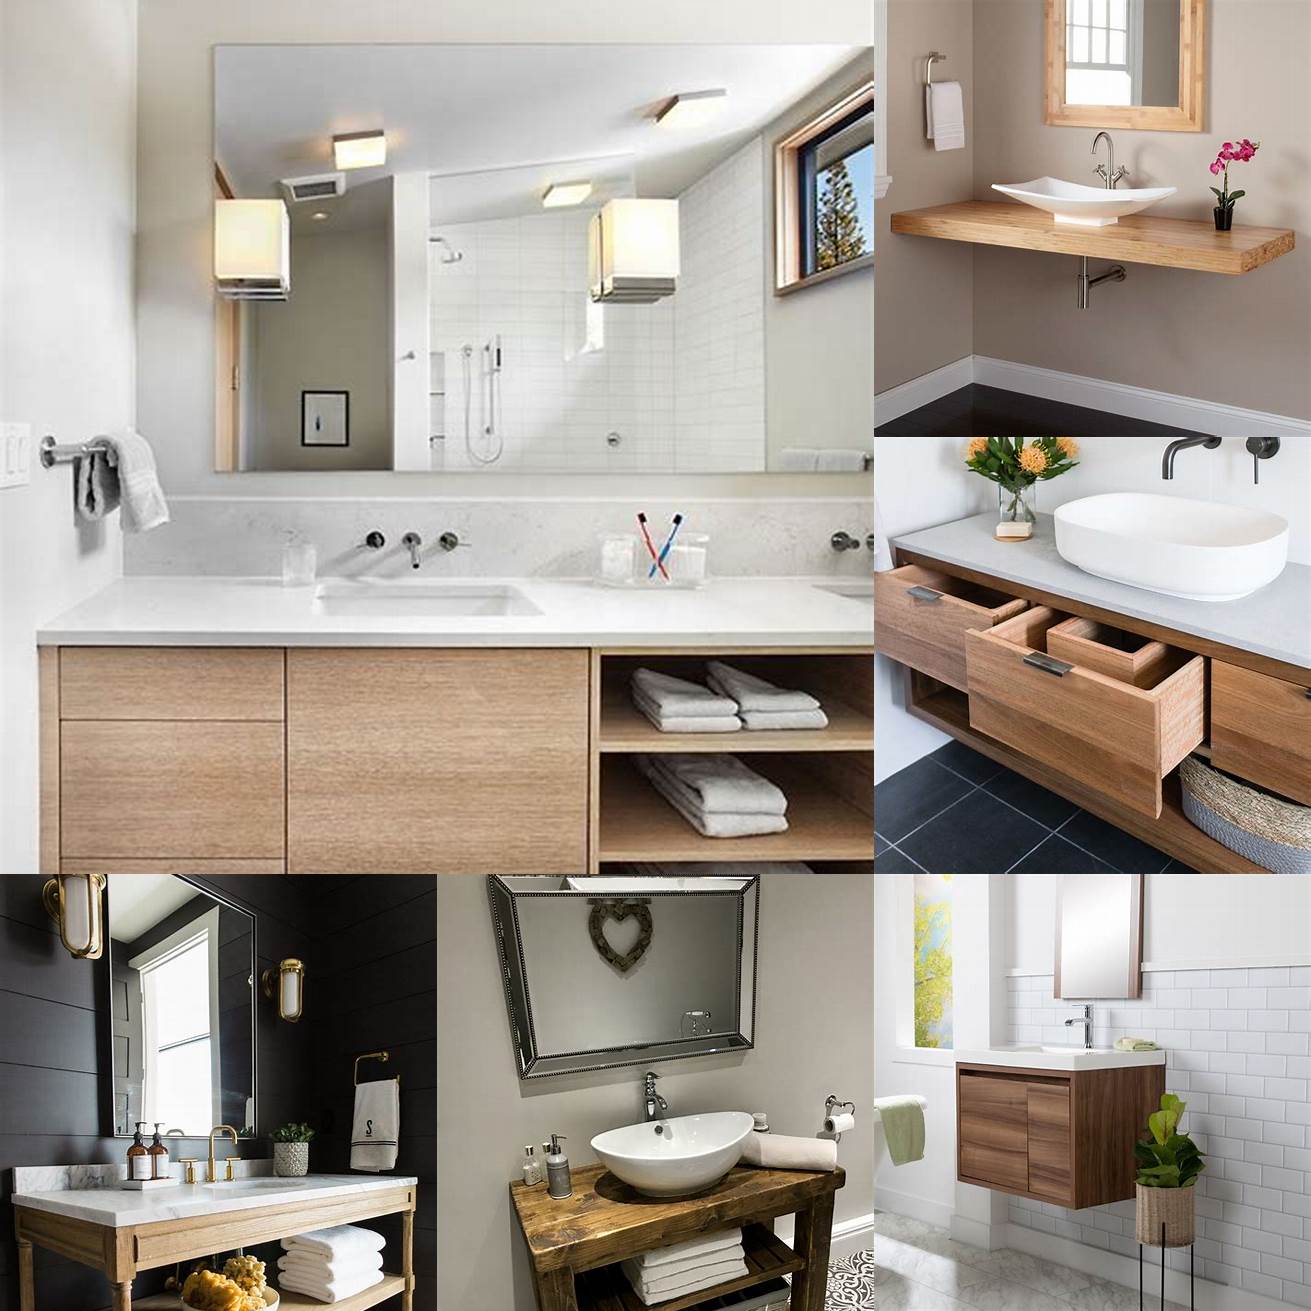 Image 6 A minimalist bathroom vanity with a single drawer